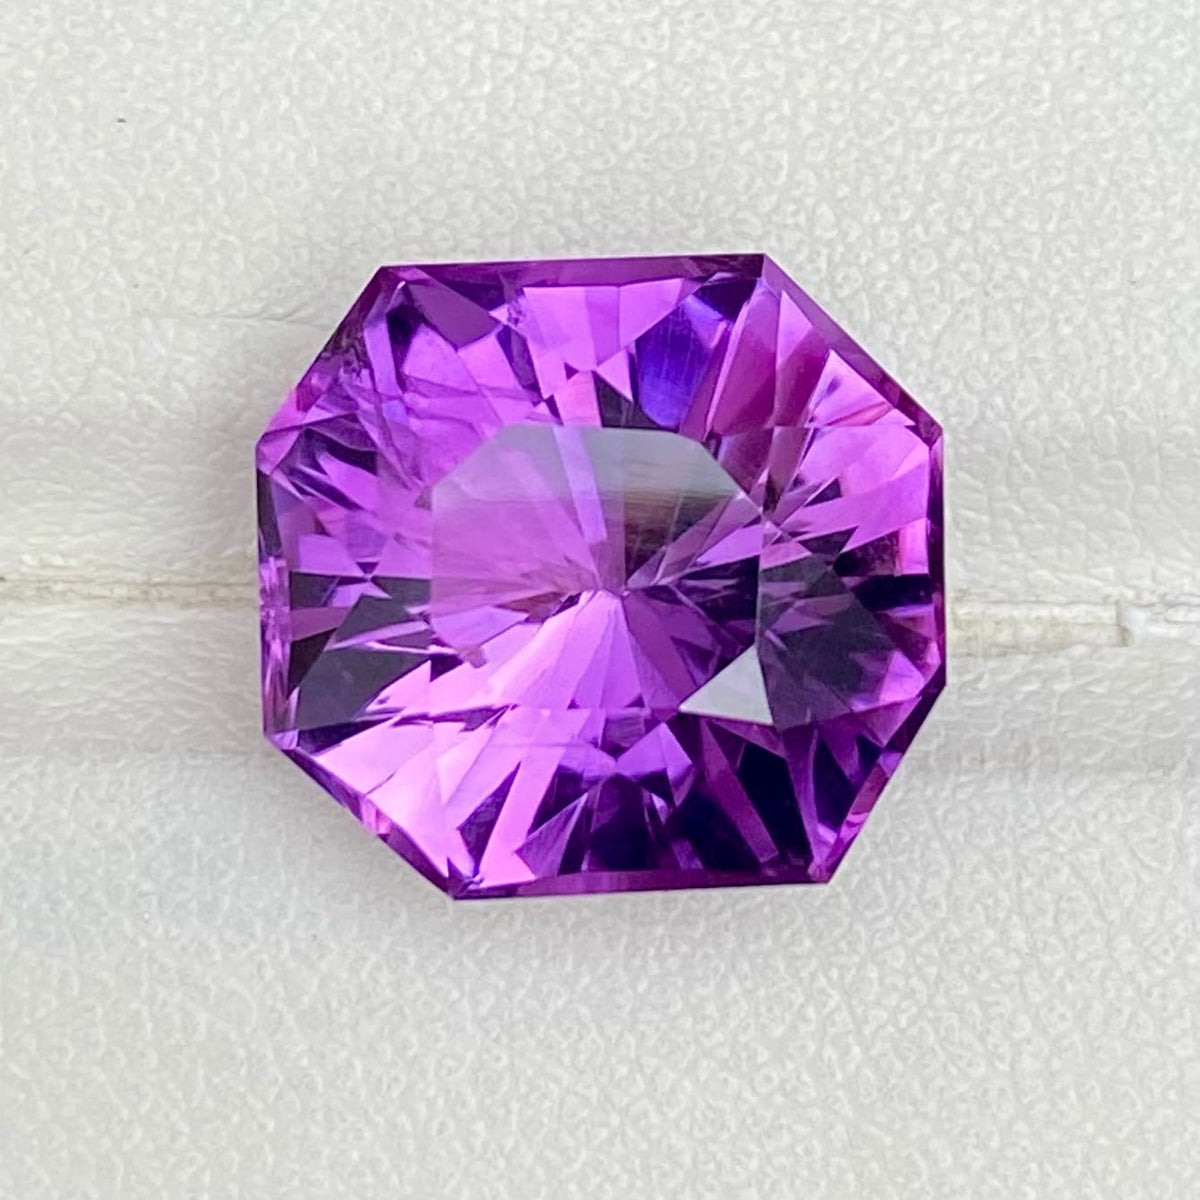 Tyrian Purple Amethyst - 11.9 carats